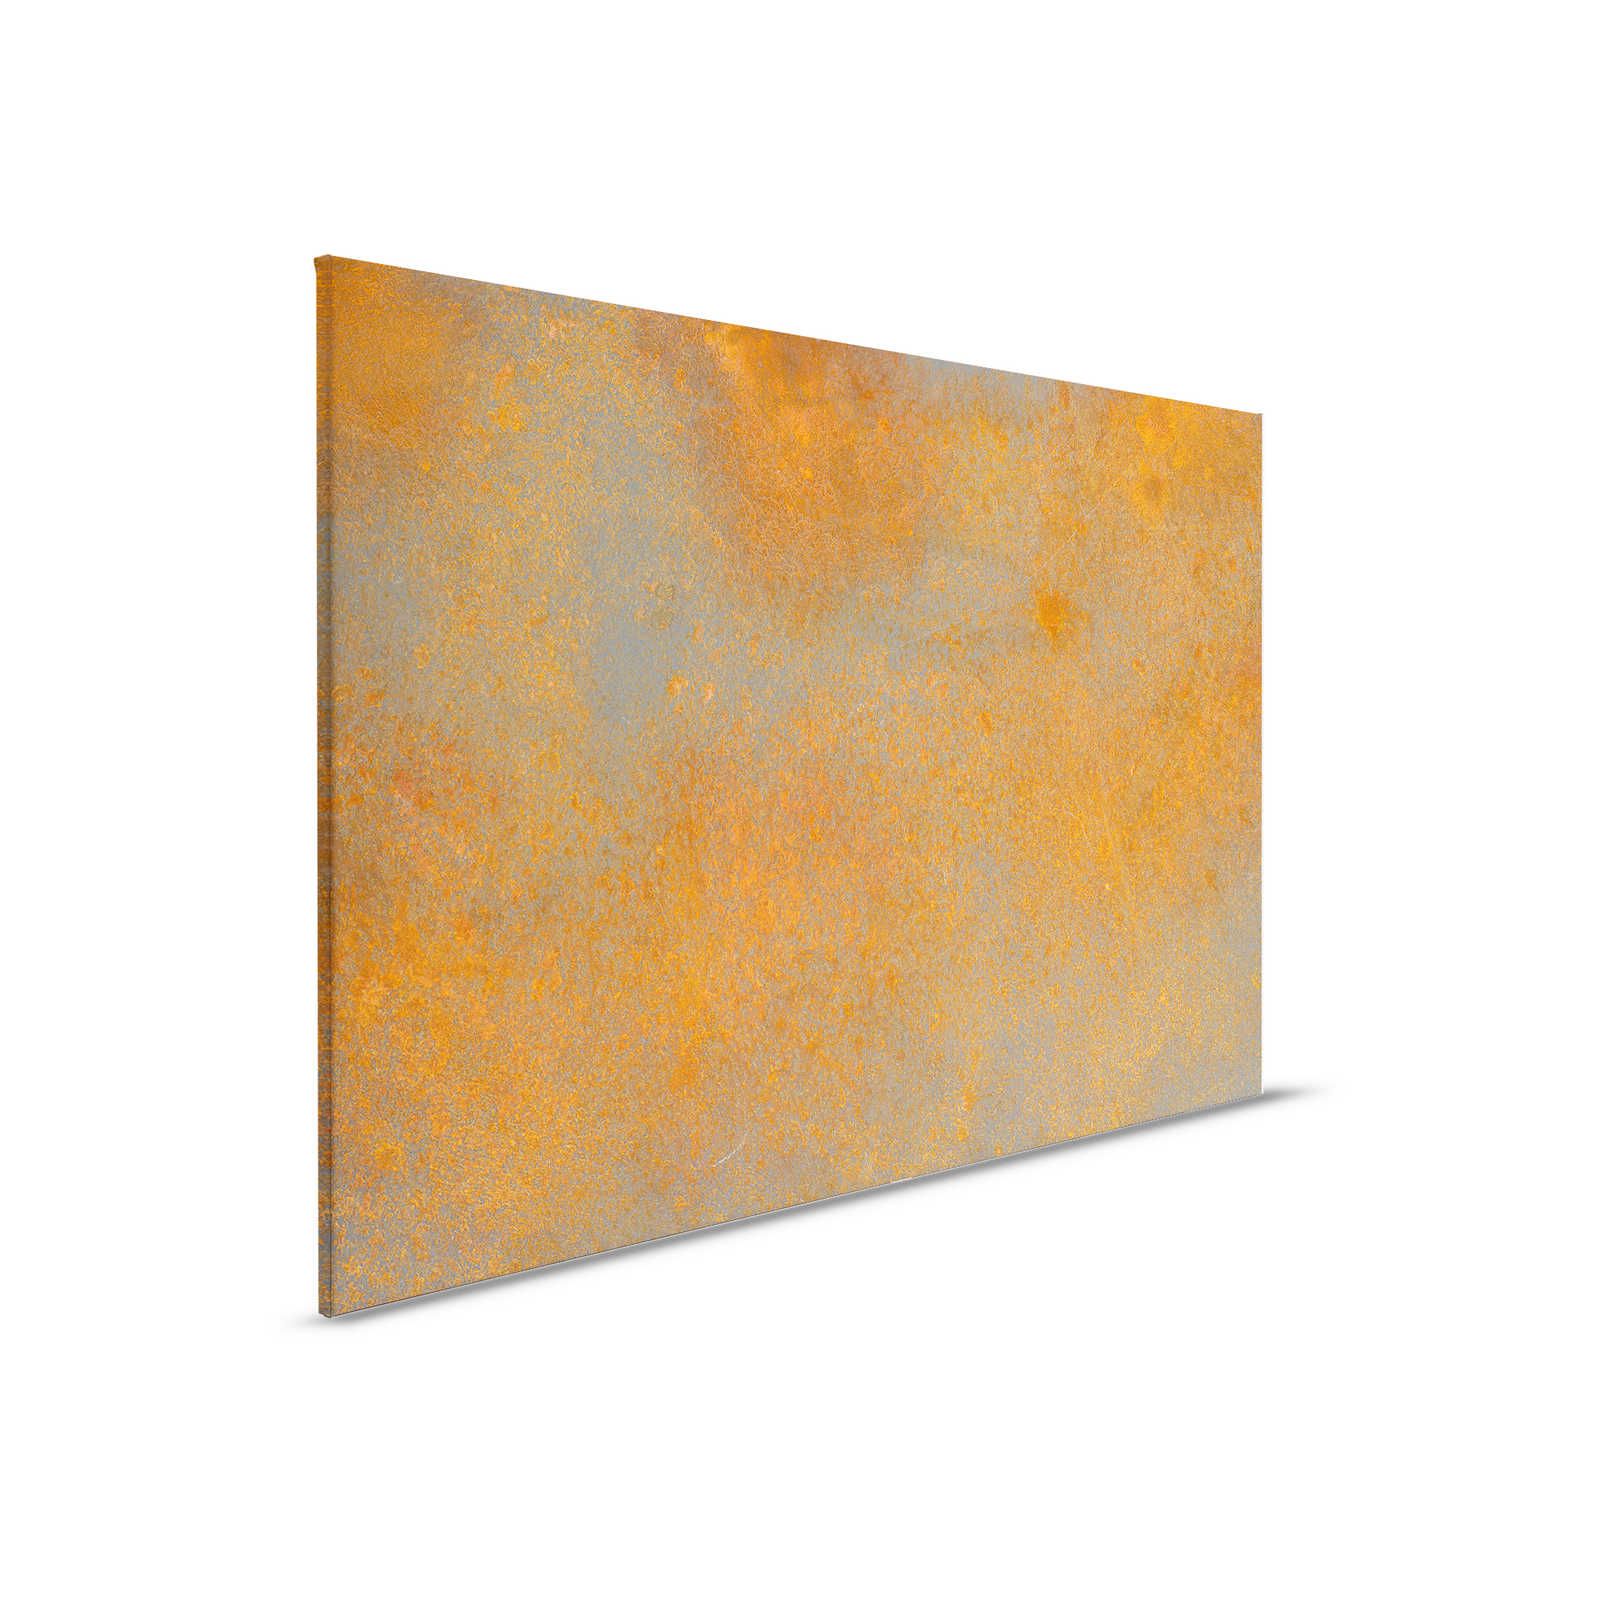         Rust Optics Canvas Painting Orange Brown with Used Look - 0.90 m x 0.60 m
    